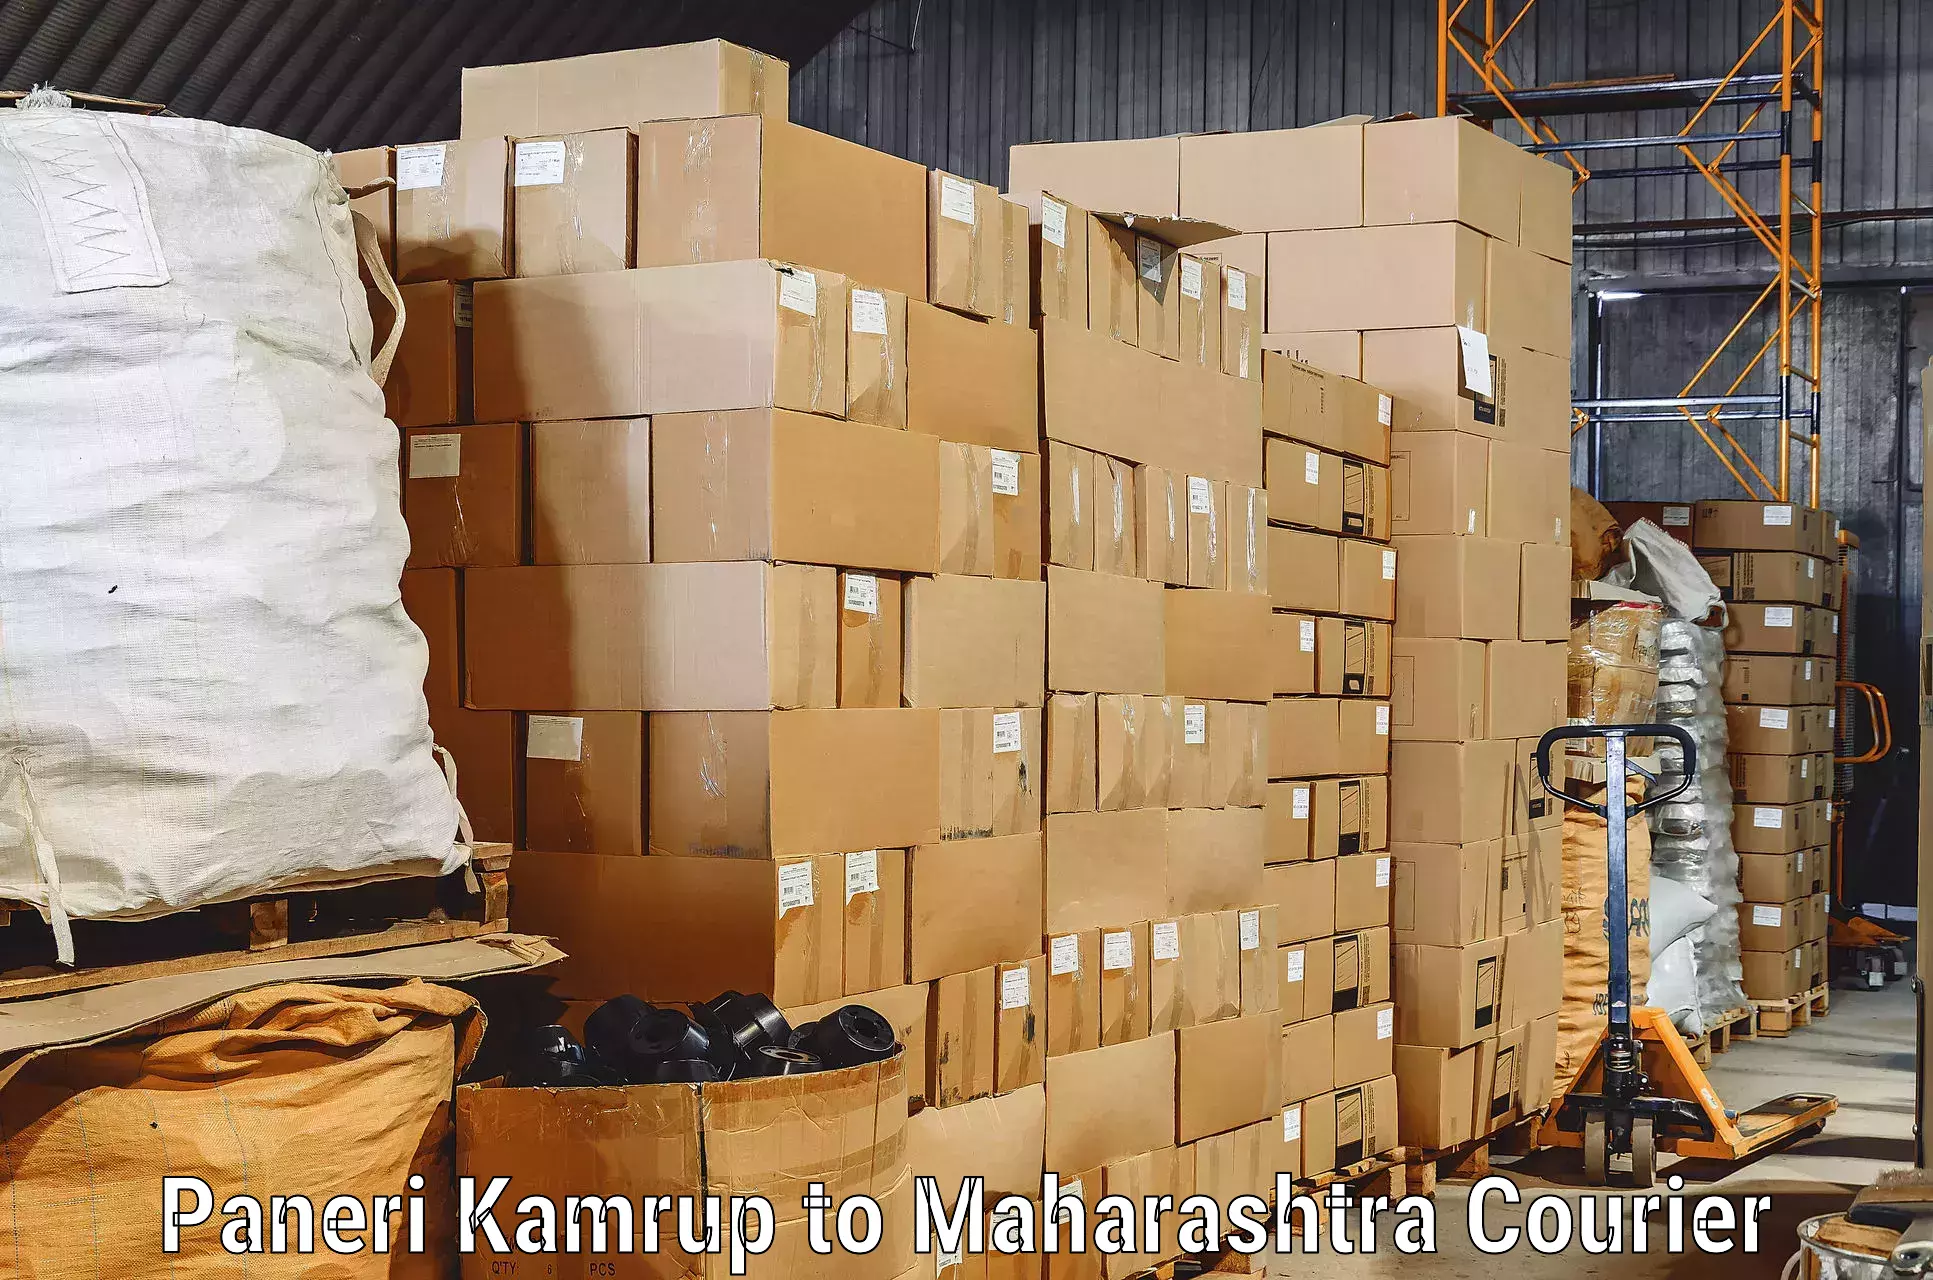 Moving and packing experts Paneri Kamrup to Pandharkawada